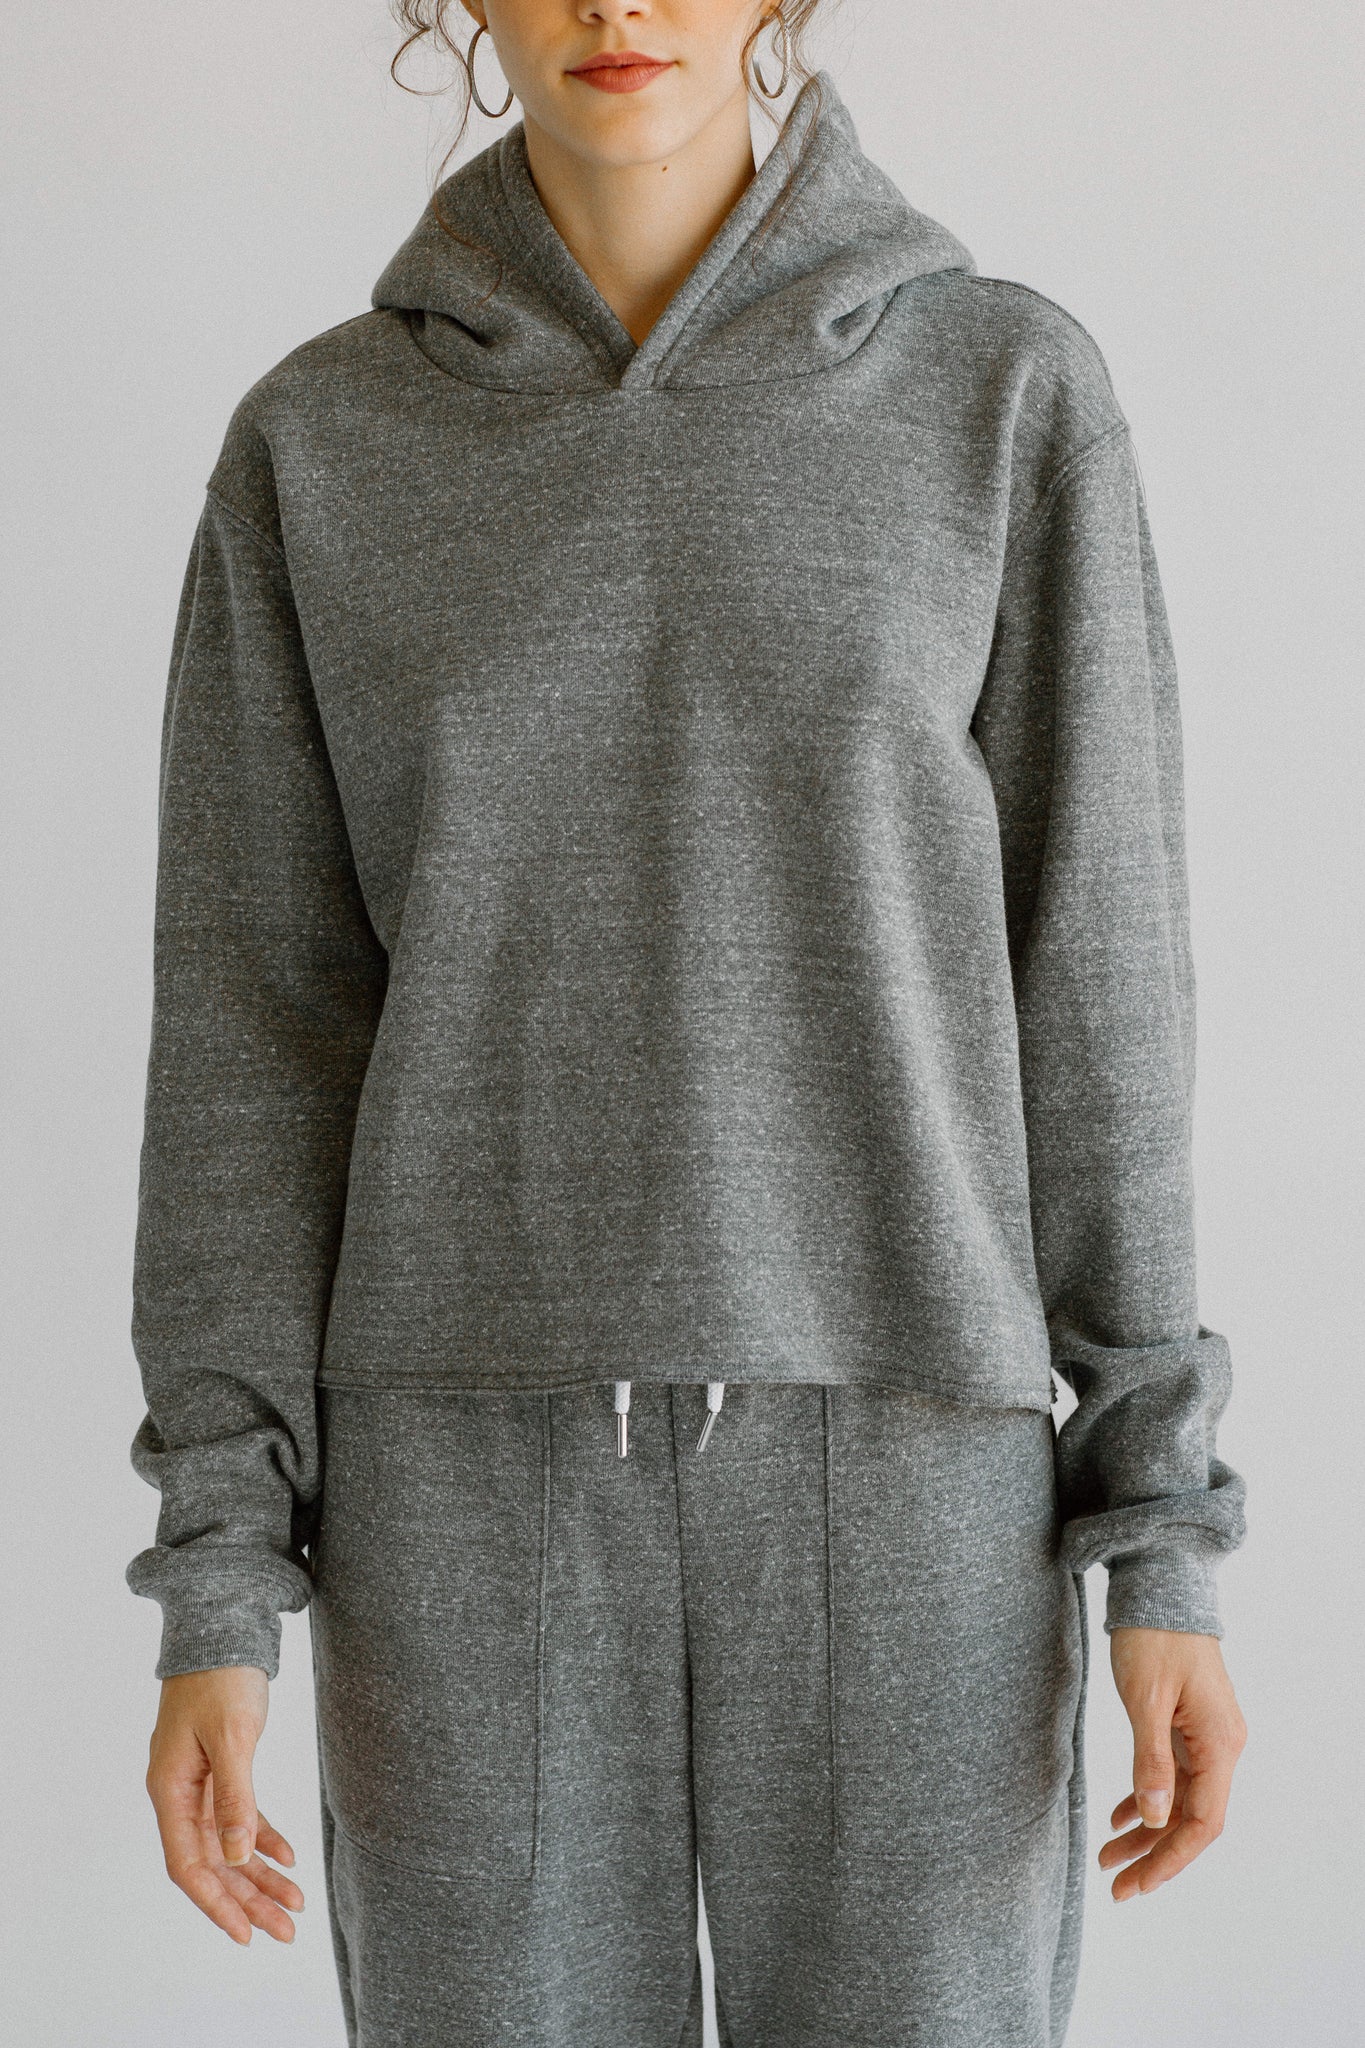 Tri-Blend Fleece Hooded Pullover Sweatshirt with Sweatpants Set Charcoal